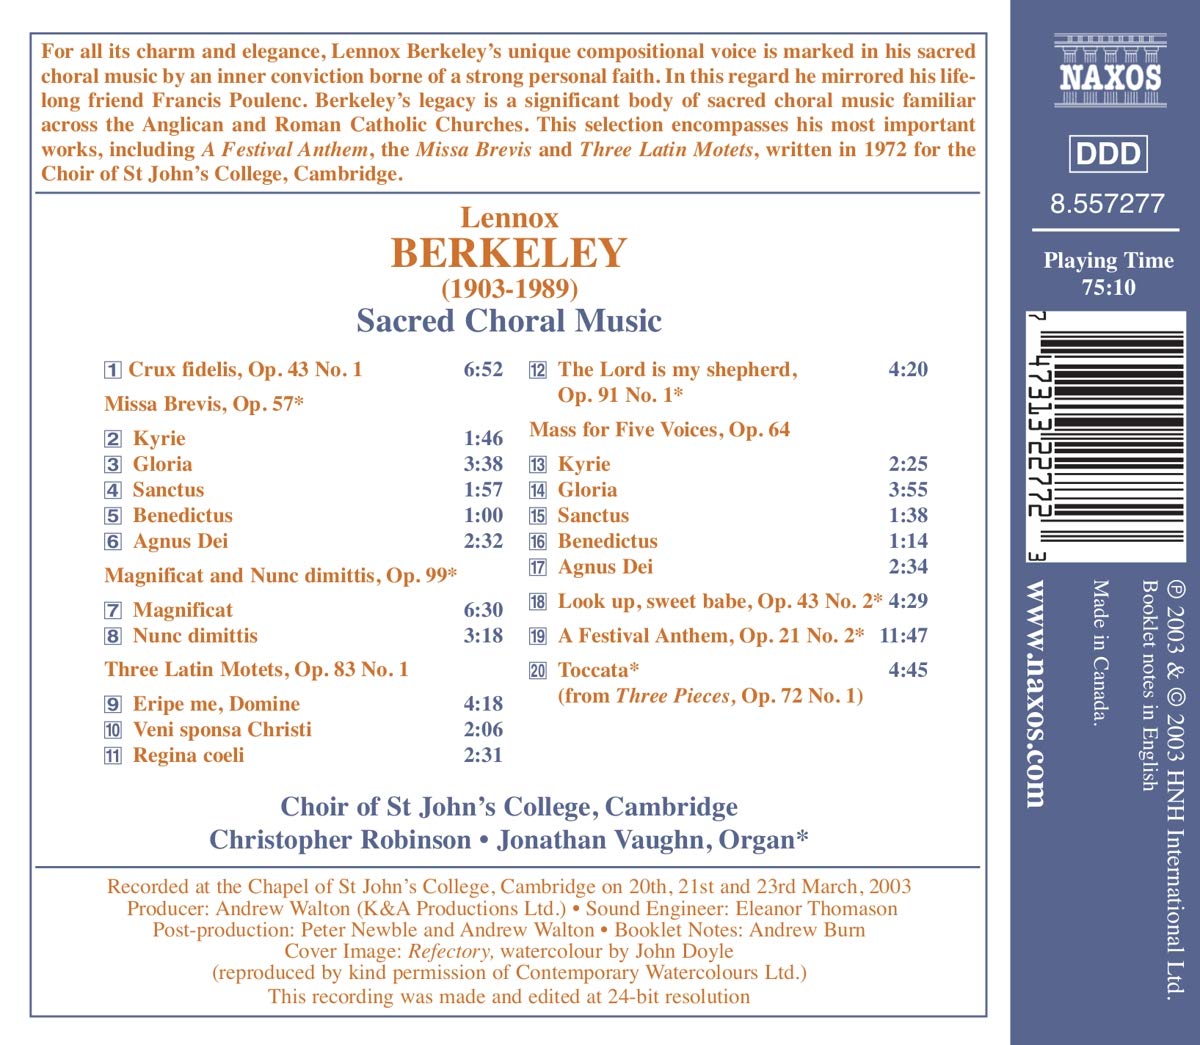 Christopher Robinson 레녹스 버클리: 종교 합창음악 모음 (Lennox Berkeley : Sacred Choral Music) 